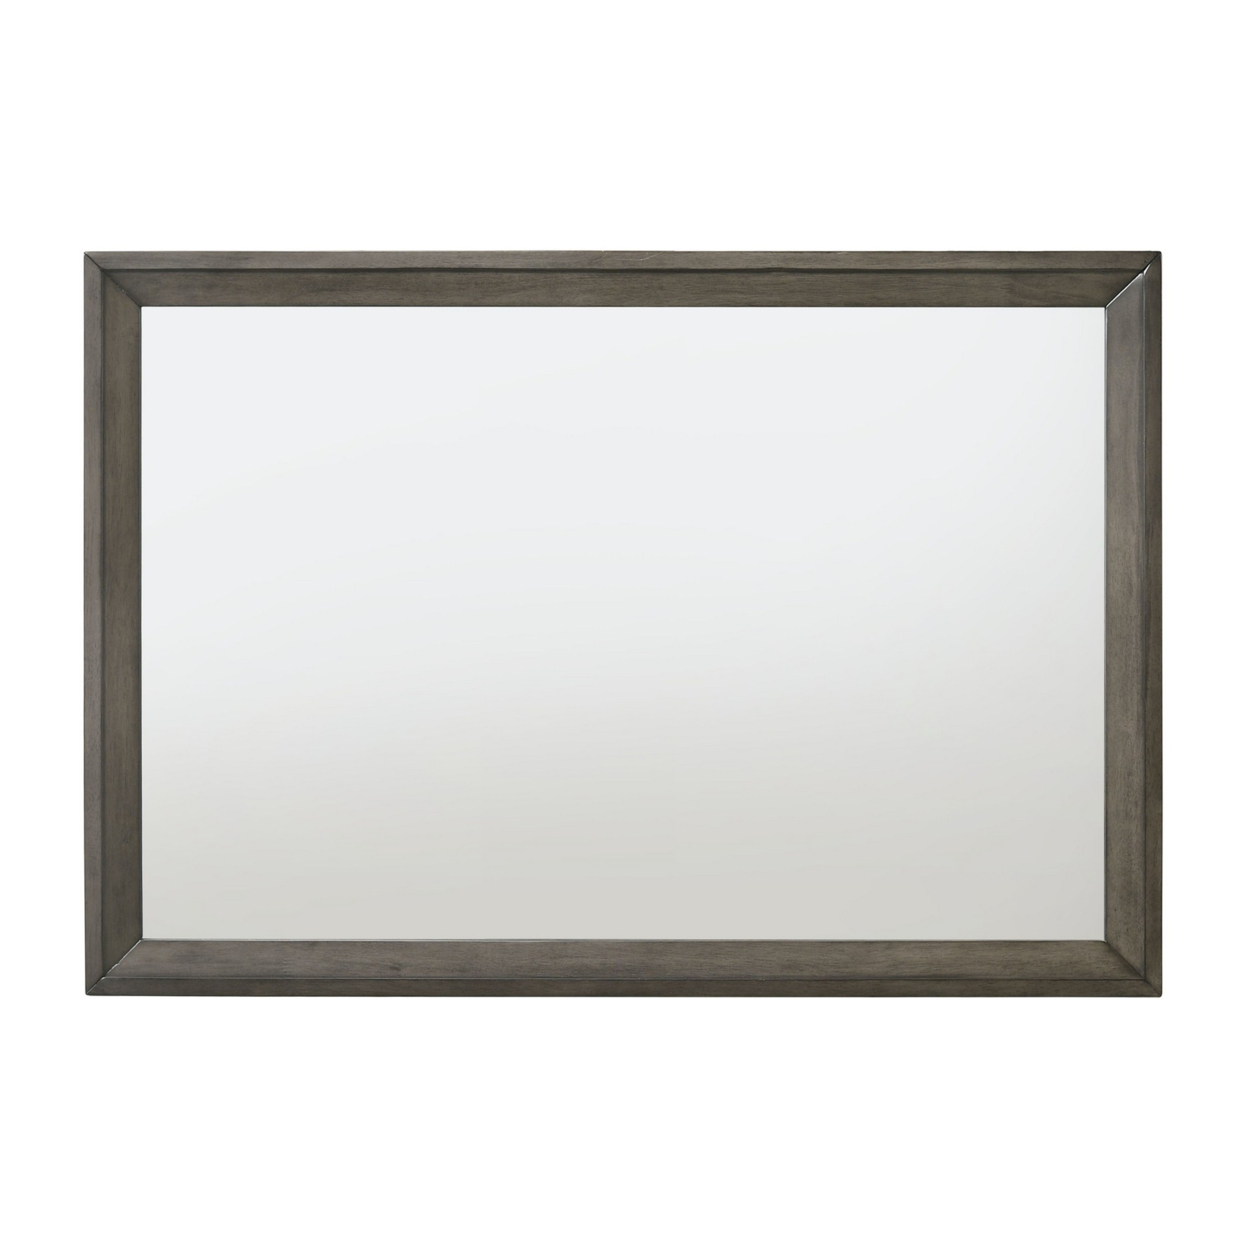 Rectangular Wooden Frame Mirror With Mounting Hardware, Gray And Silver- Saltoro Sherpi